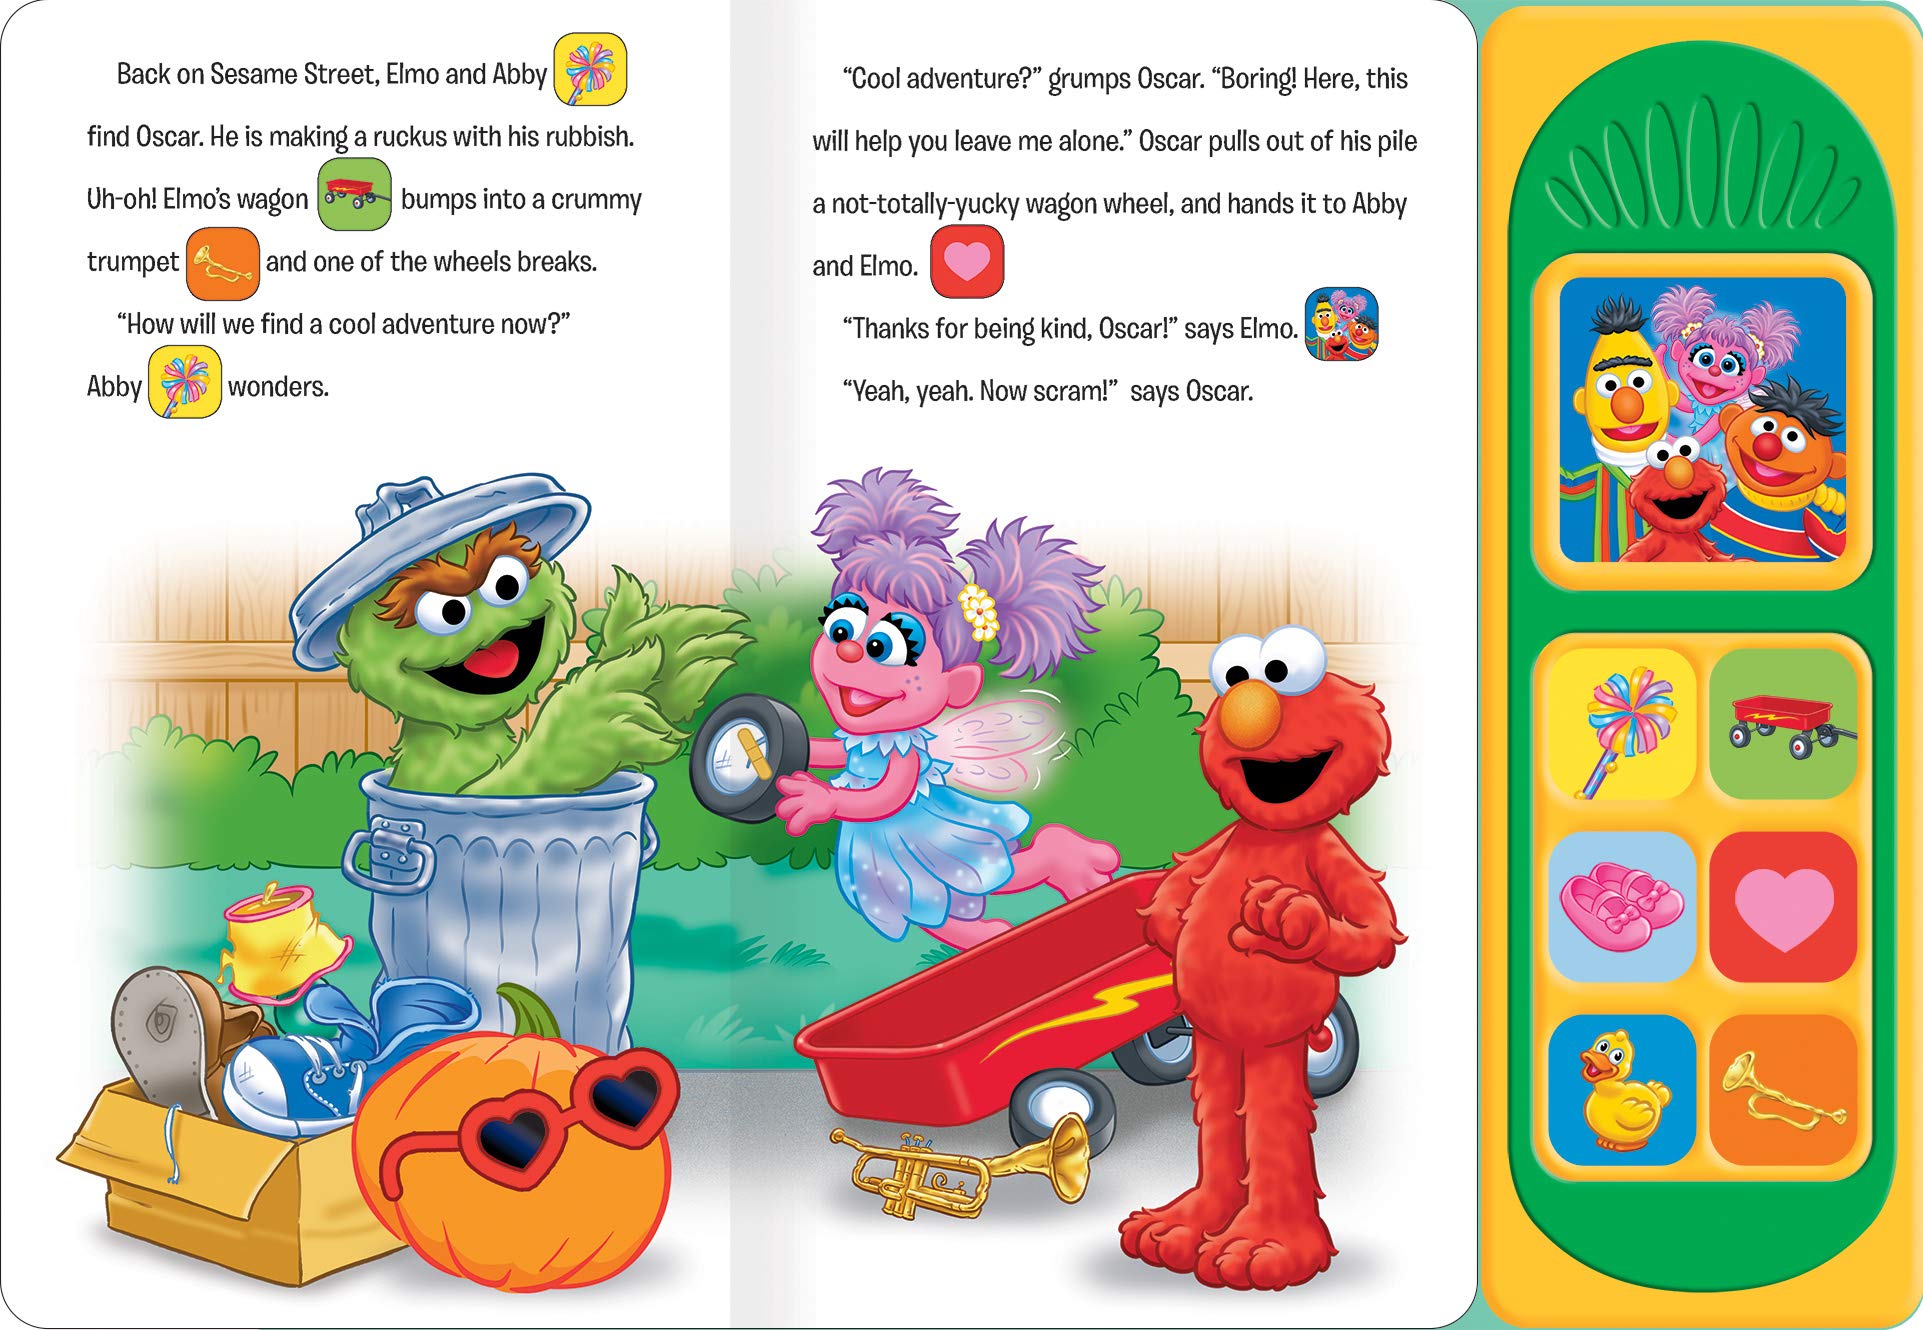 Sesame Street Elmo, Abby Cadabby, Zoe, and More! - It's Cool to Be Kind Sound Book - PI Kids (Play-A-Sound)